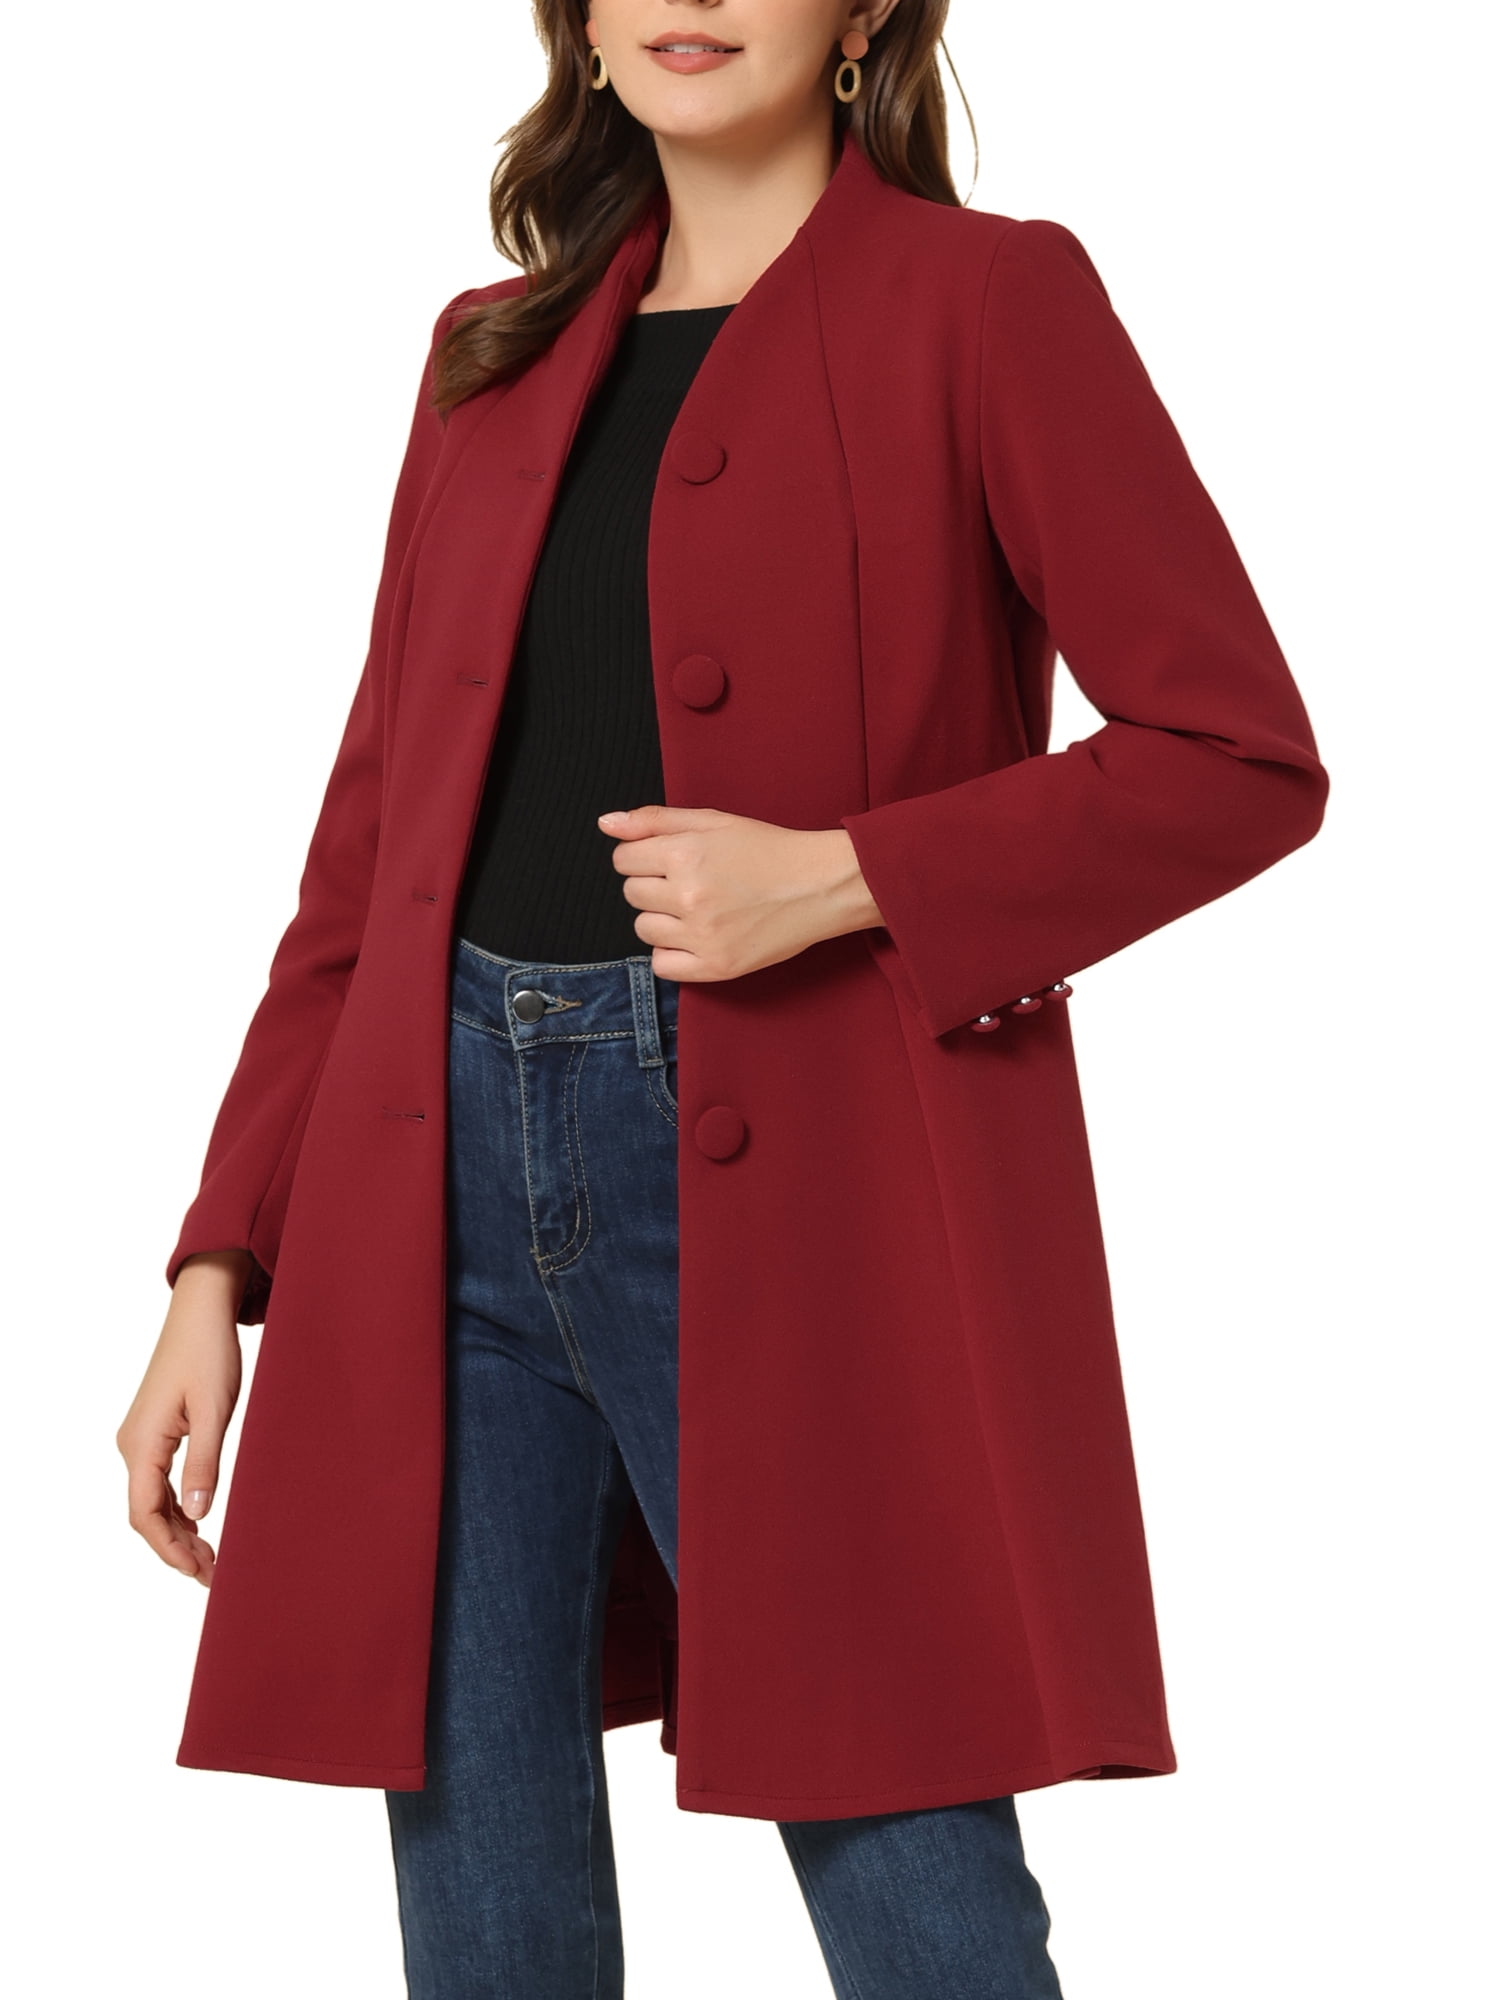 Women's Single Coats - Buy Women's Single Coats Online Starting at Just  ₹191